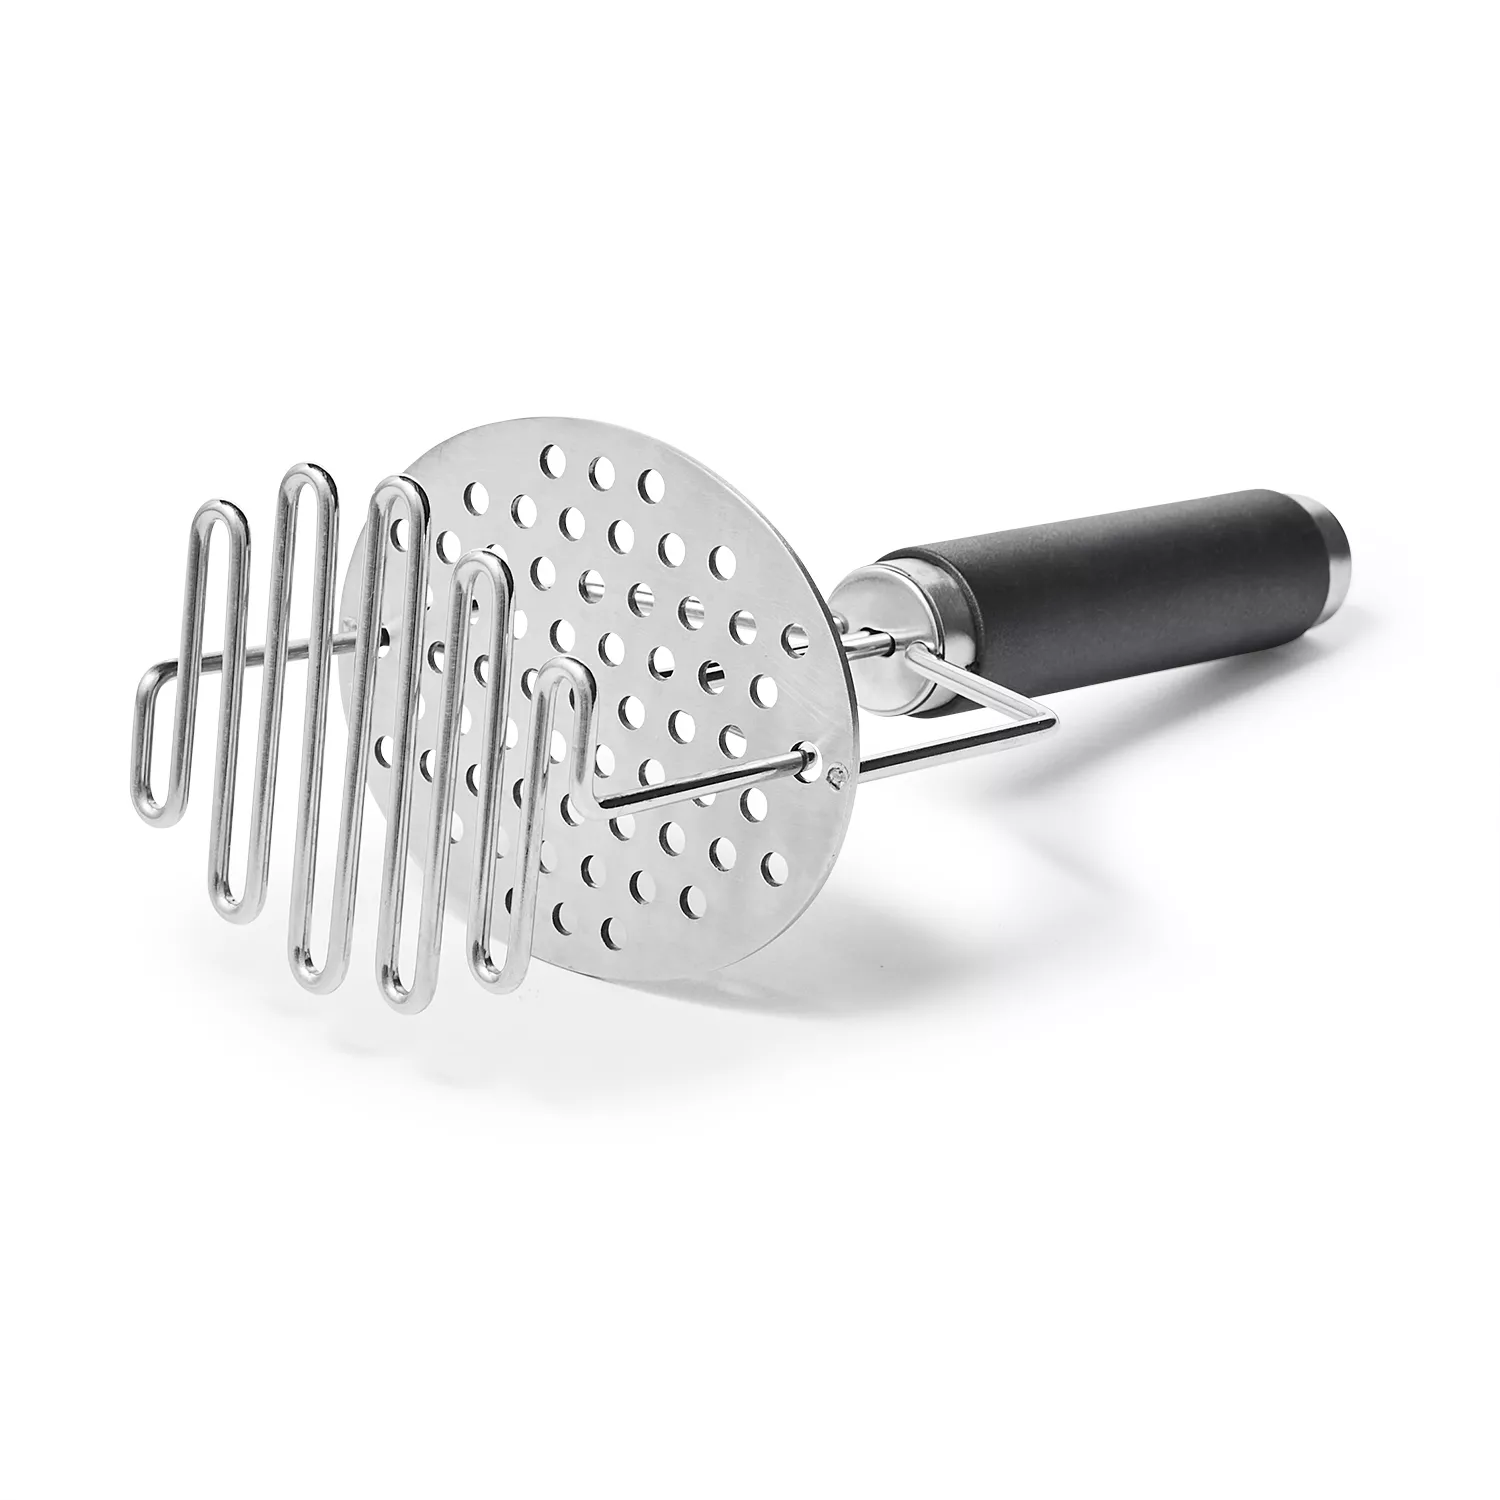  Mini Potato Masher with Wood Non Slip Handle,Stainless Steel  Masher Kitchen Tool: Home & Kitchen